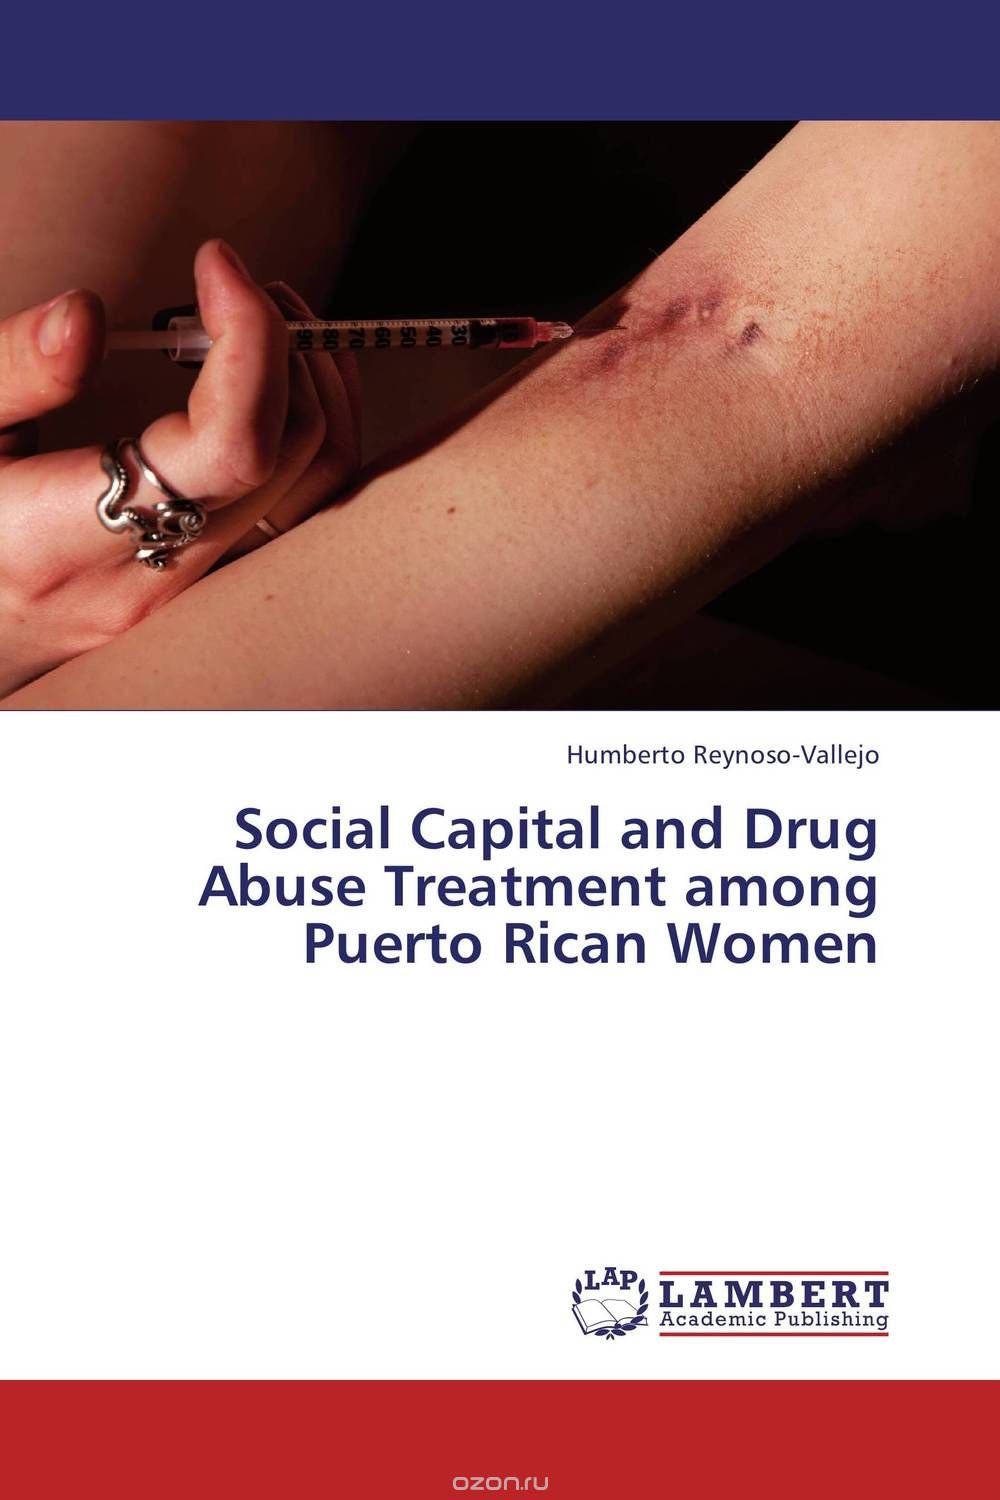 Скачать книгу "Social Capital and Drug Abuse Treatment among Puerto Rican Women"